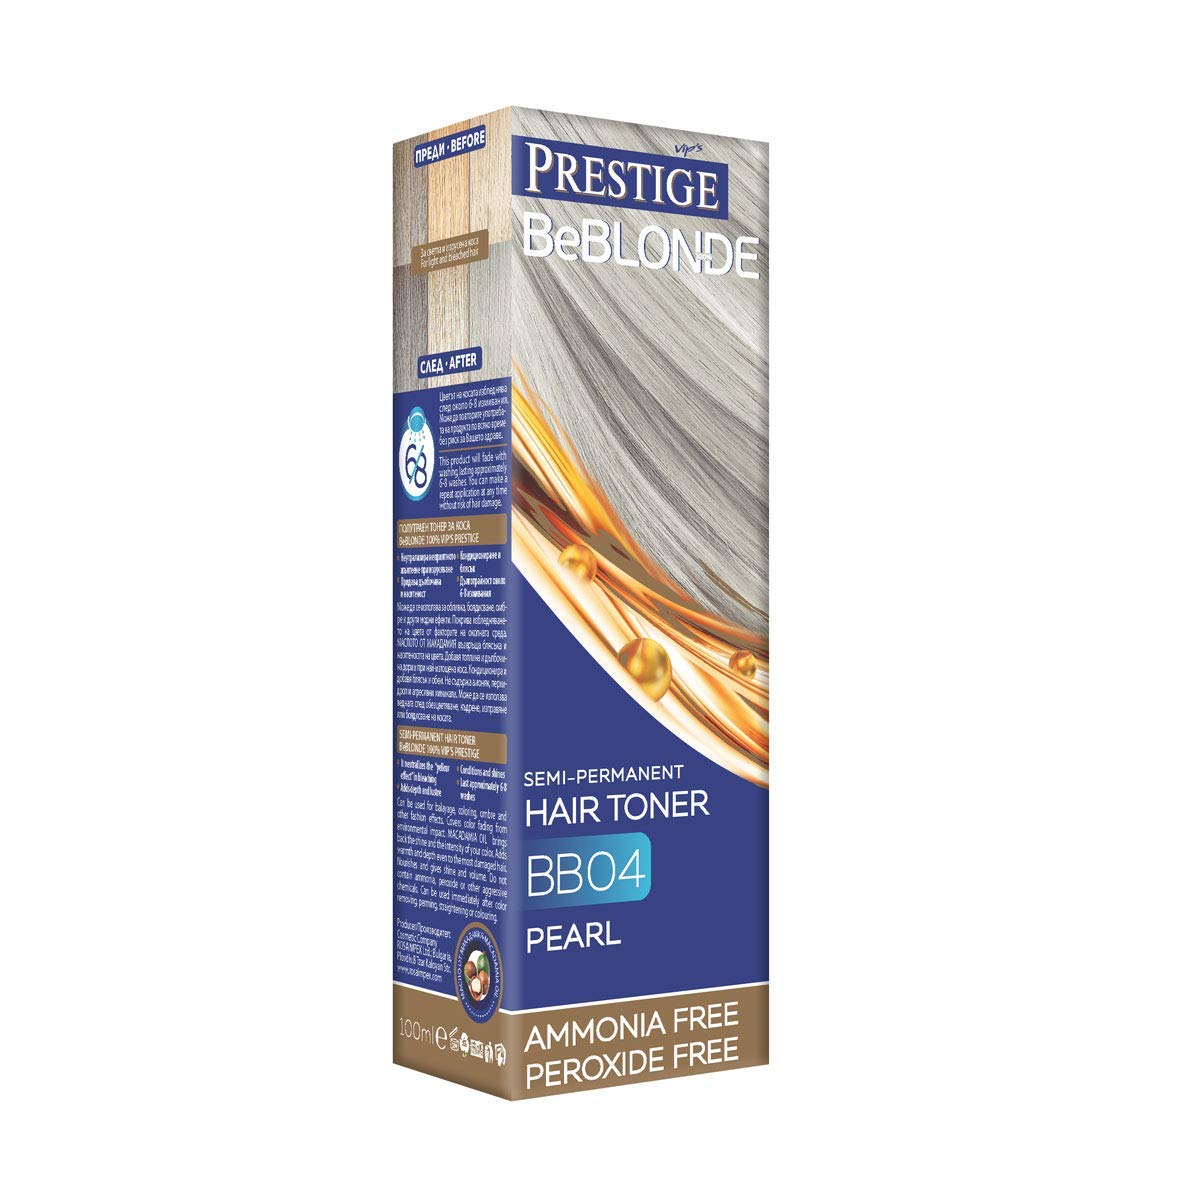 VIPs Prestige BeBlonde Semi-Permanent Hair Toner Colour Pearl BB04, No Ammonia, No Peroxide, ‎bb04